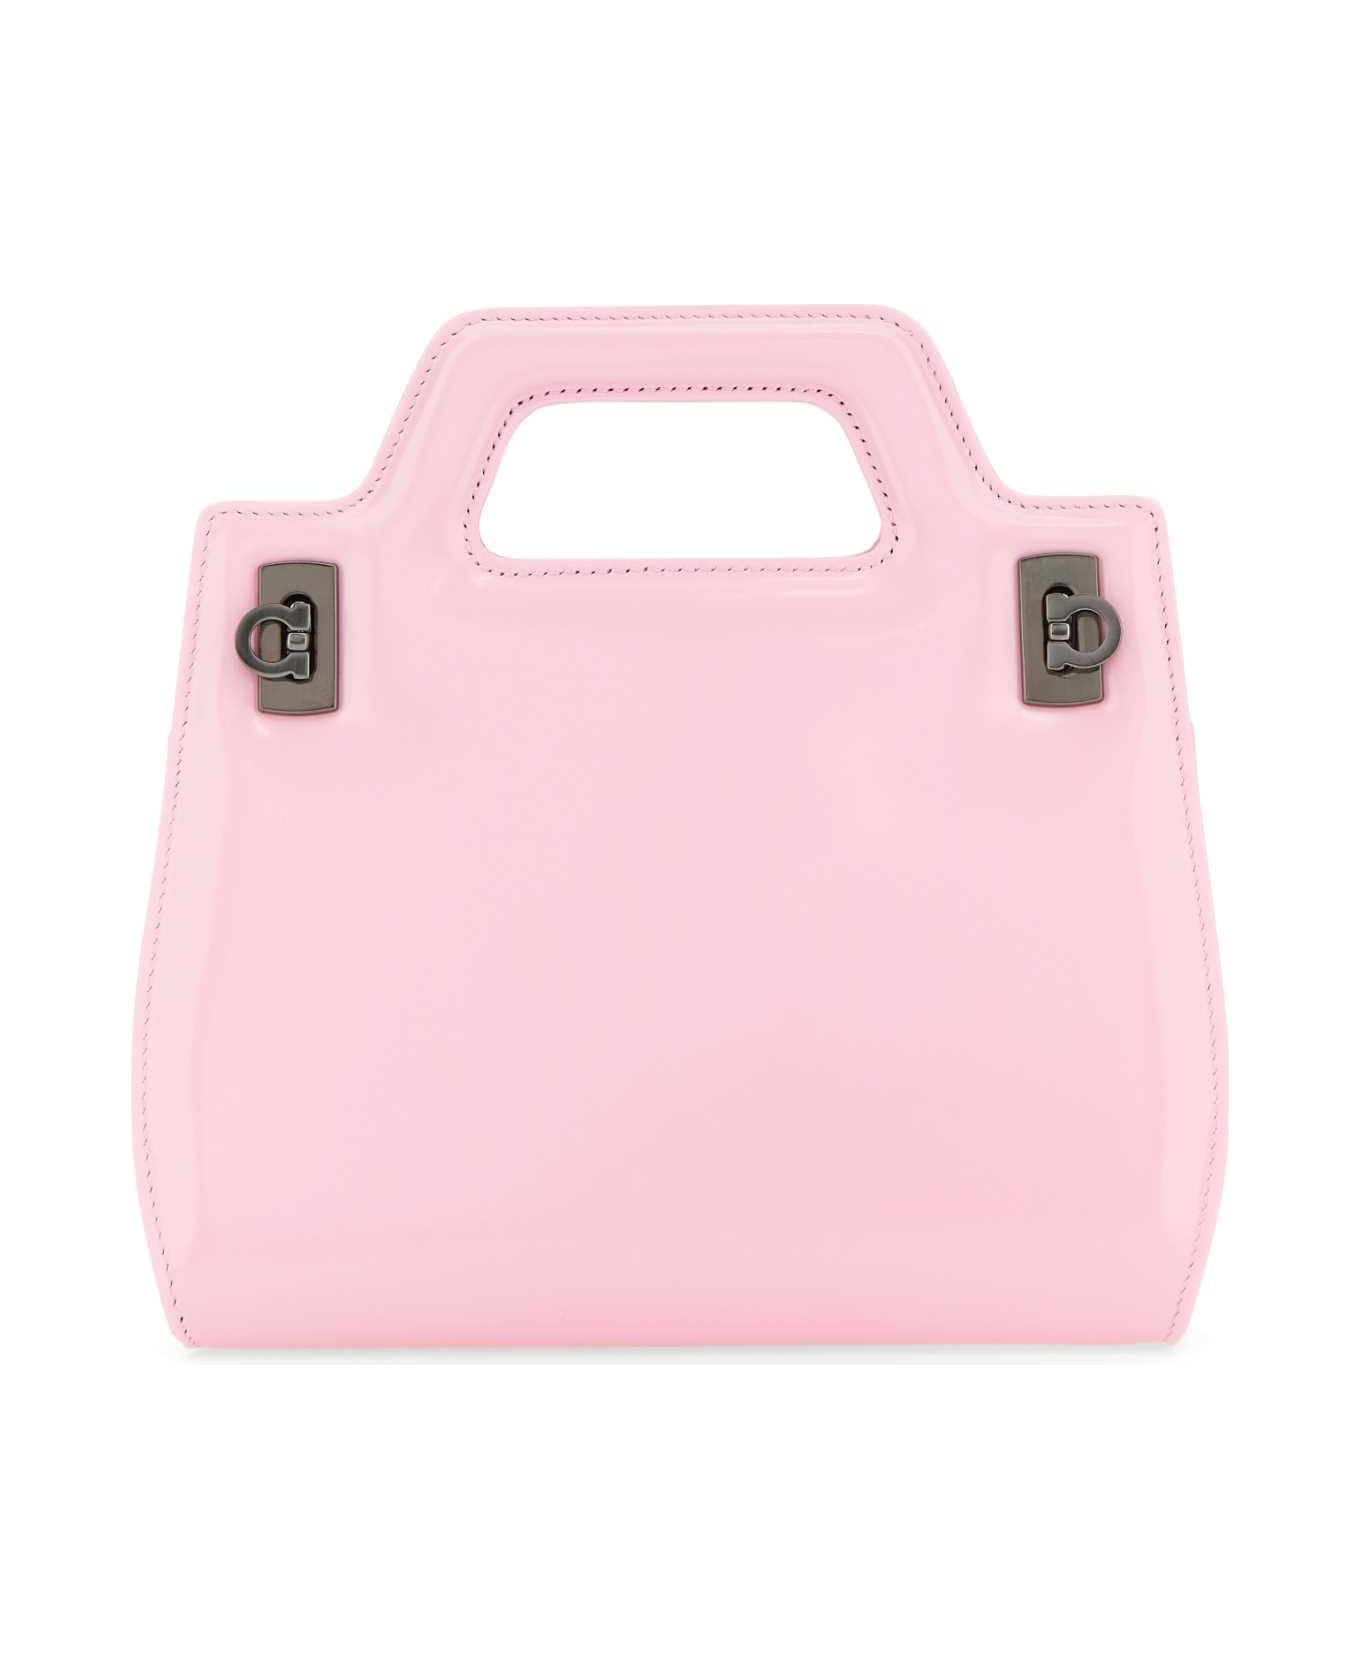 Ferragamo Pink Leather Mini Wanda Handbag - PINK